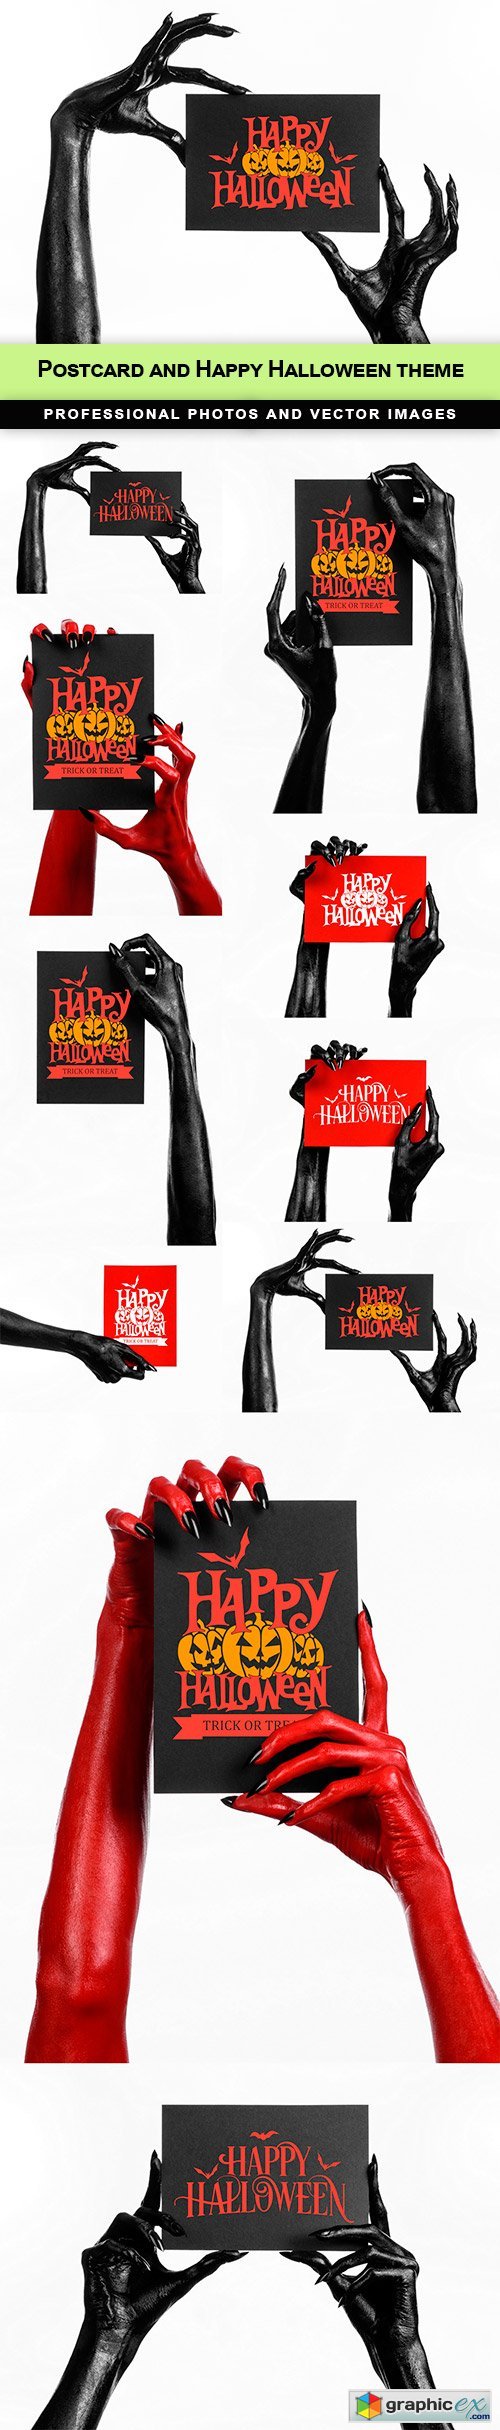 Postcard and Happy Halloween theme - 10 UHQ JPEG